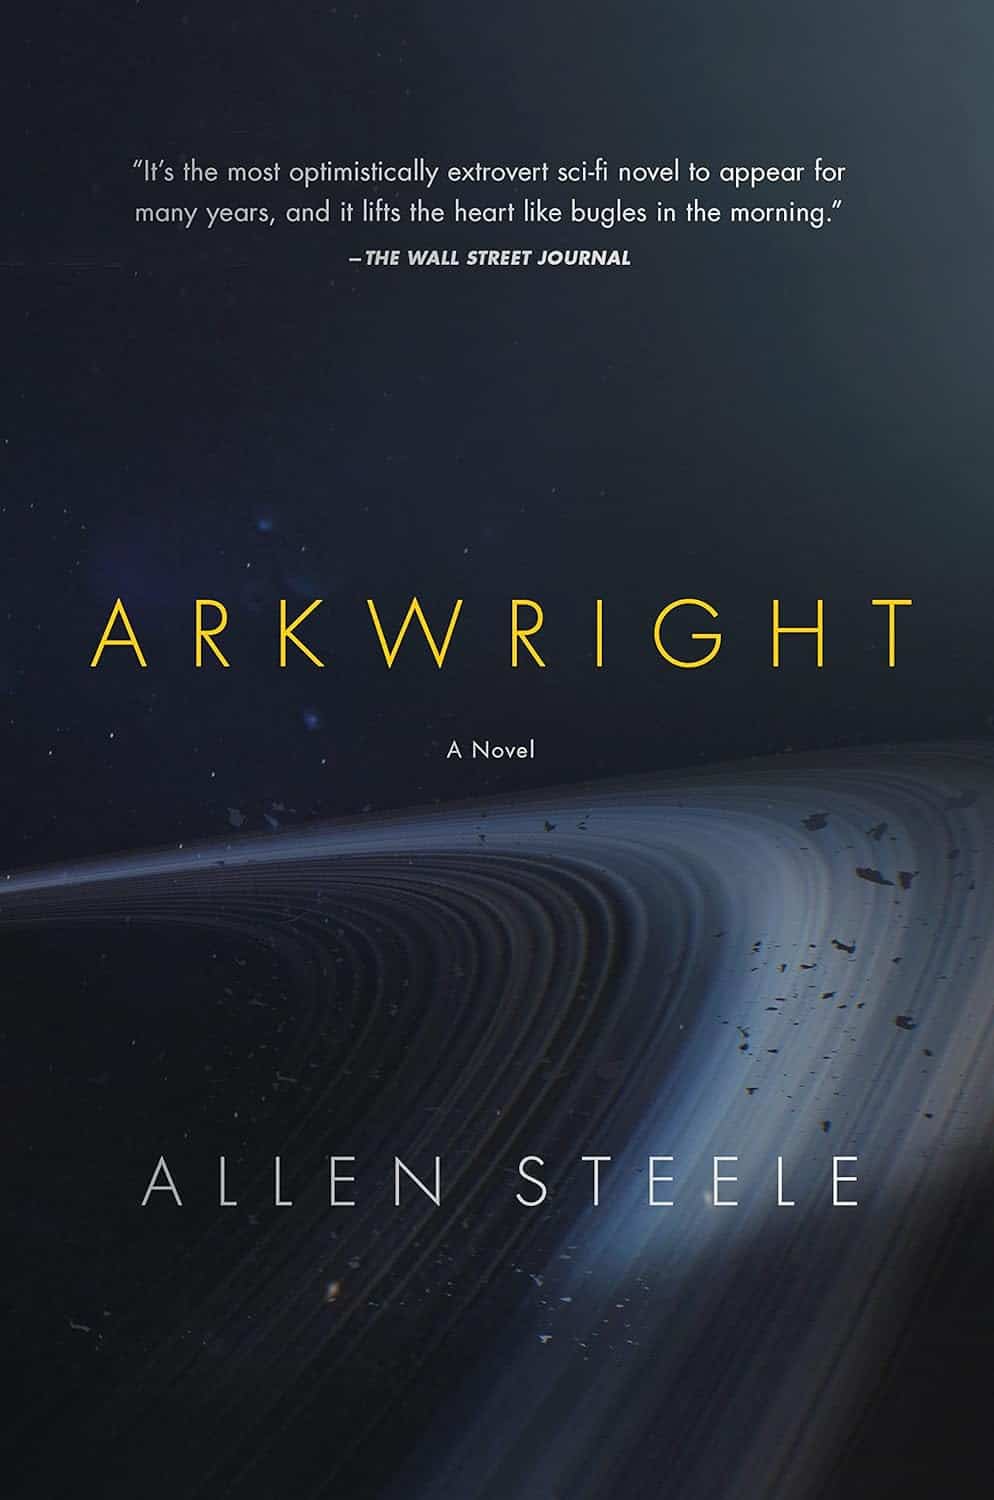 Arkwright by Allen Steele